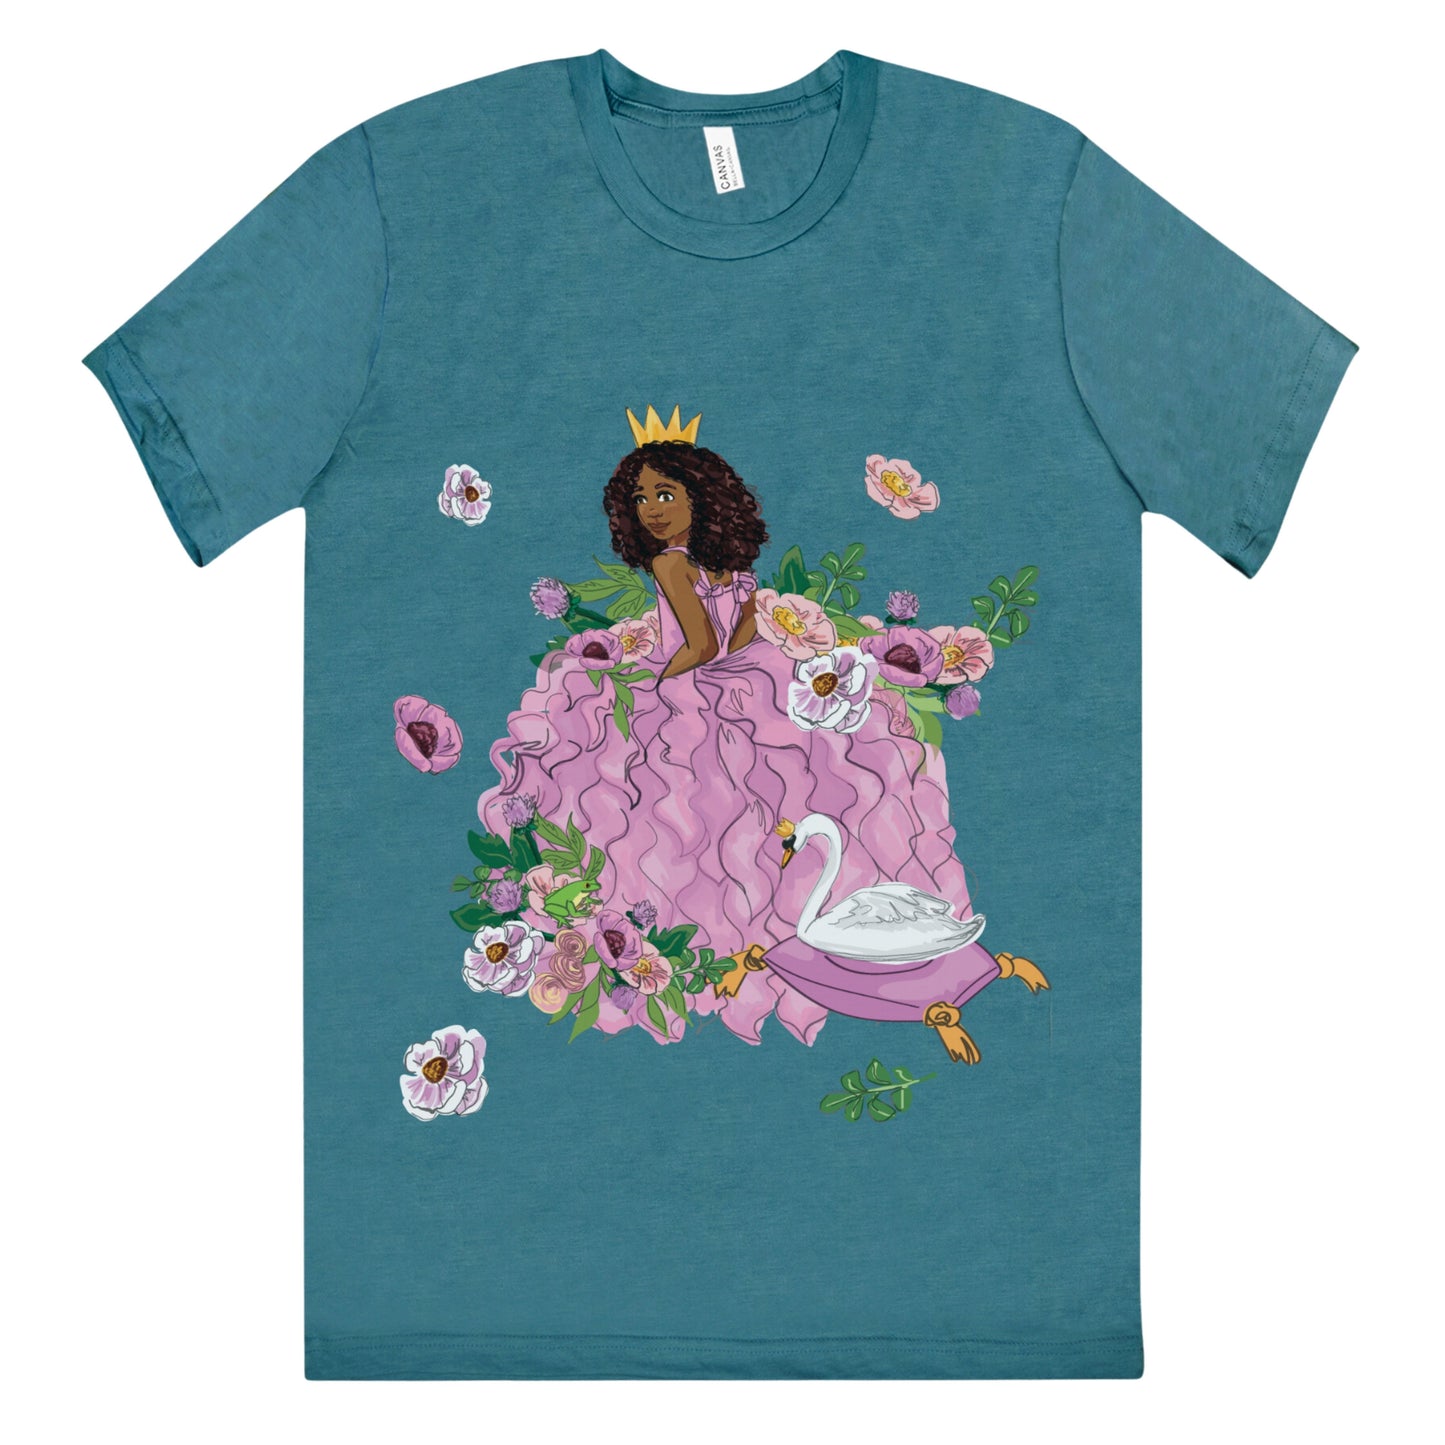 Adult Princess Graphic Tee Shirt (S-3XL Unisex)